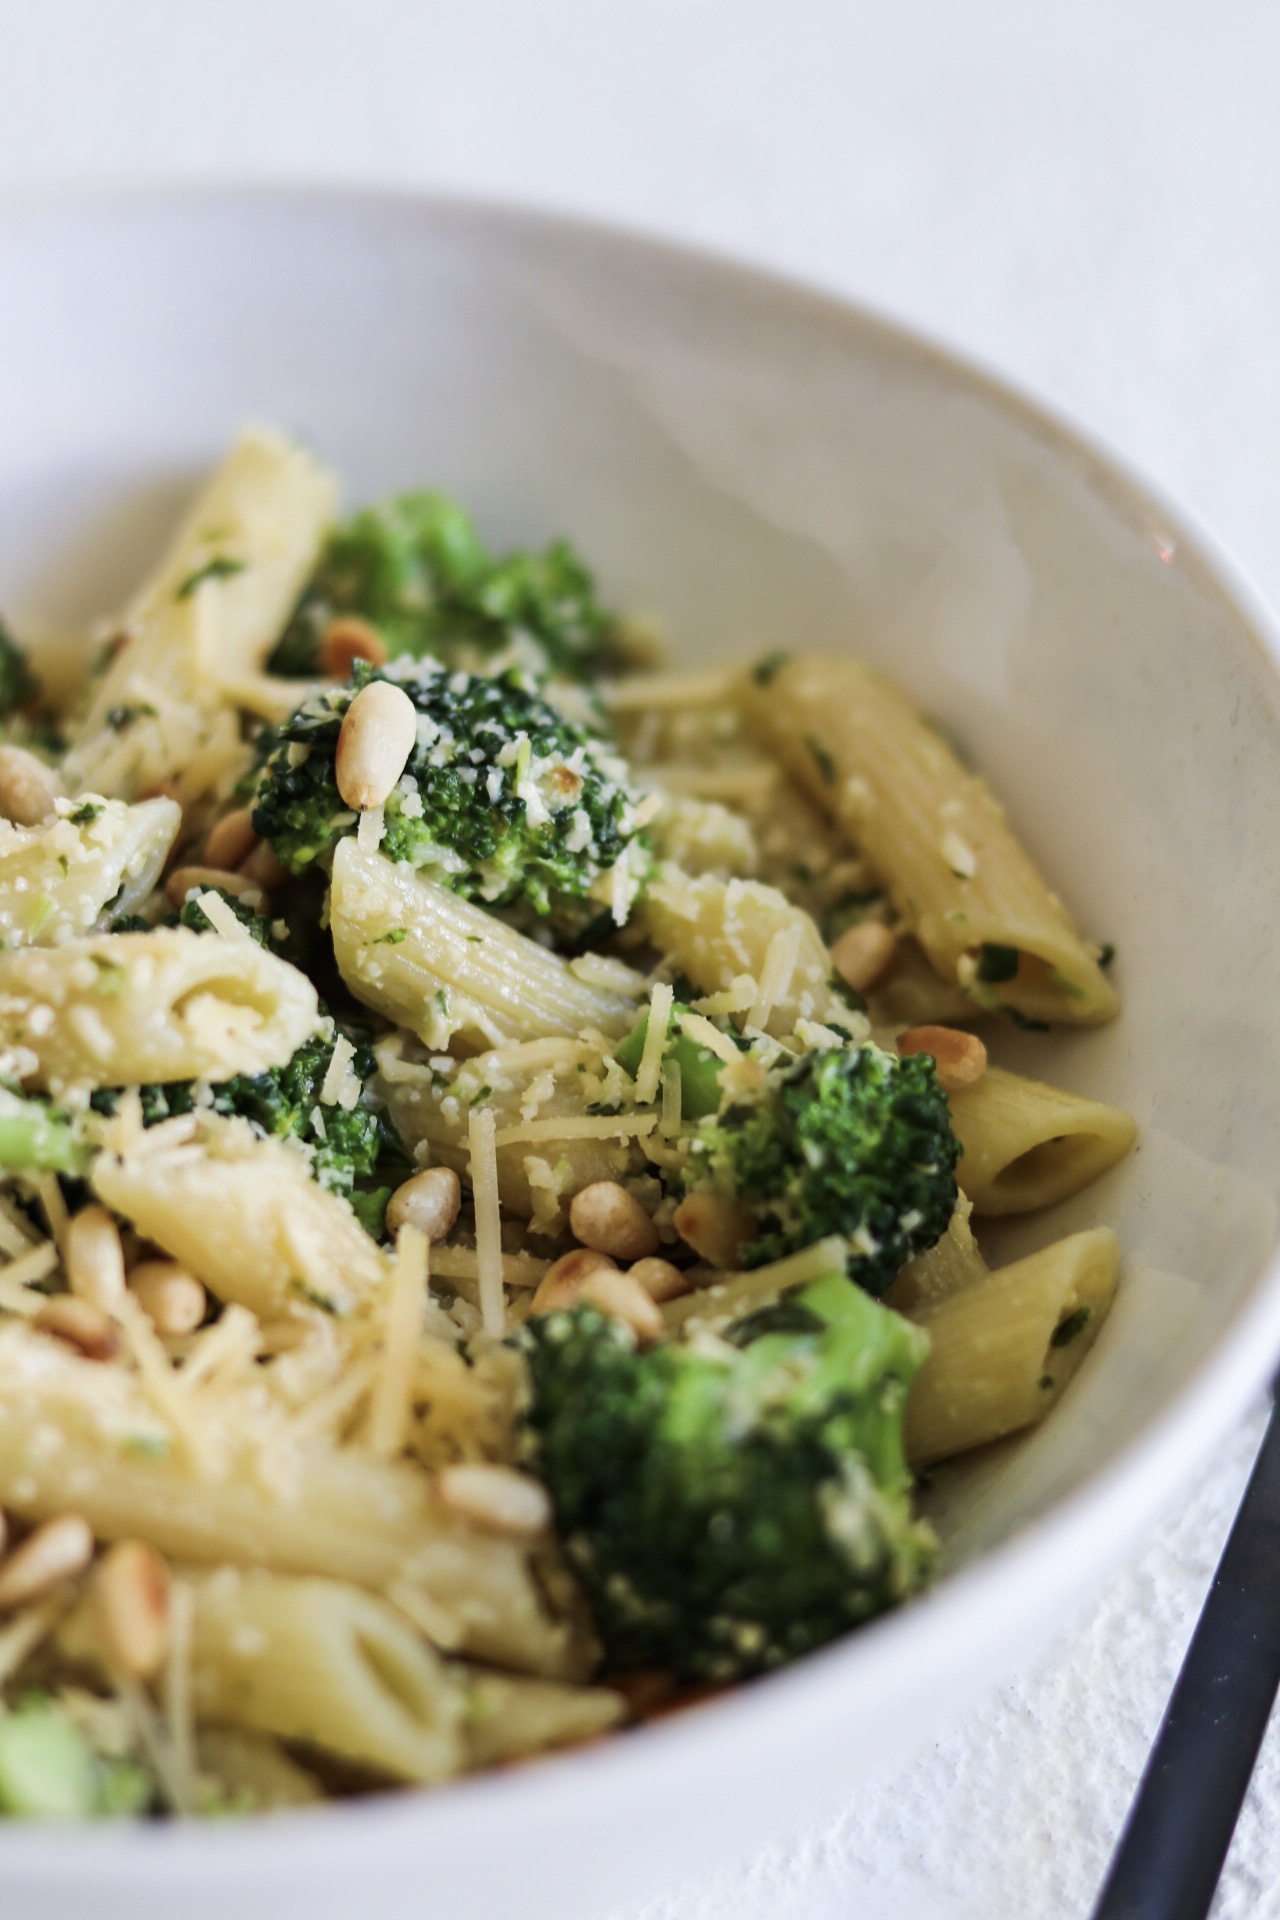 The finished dish - broccoli pesto pasta